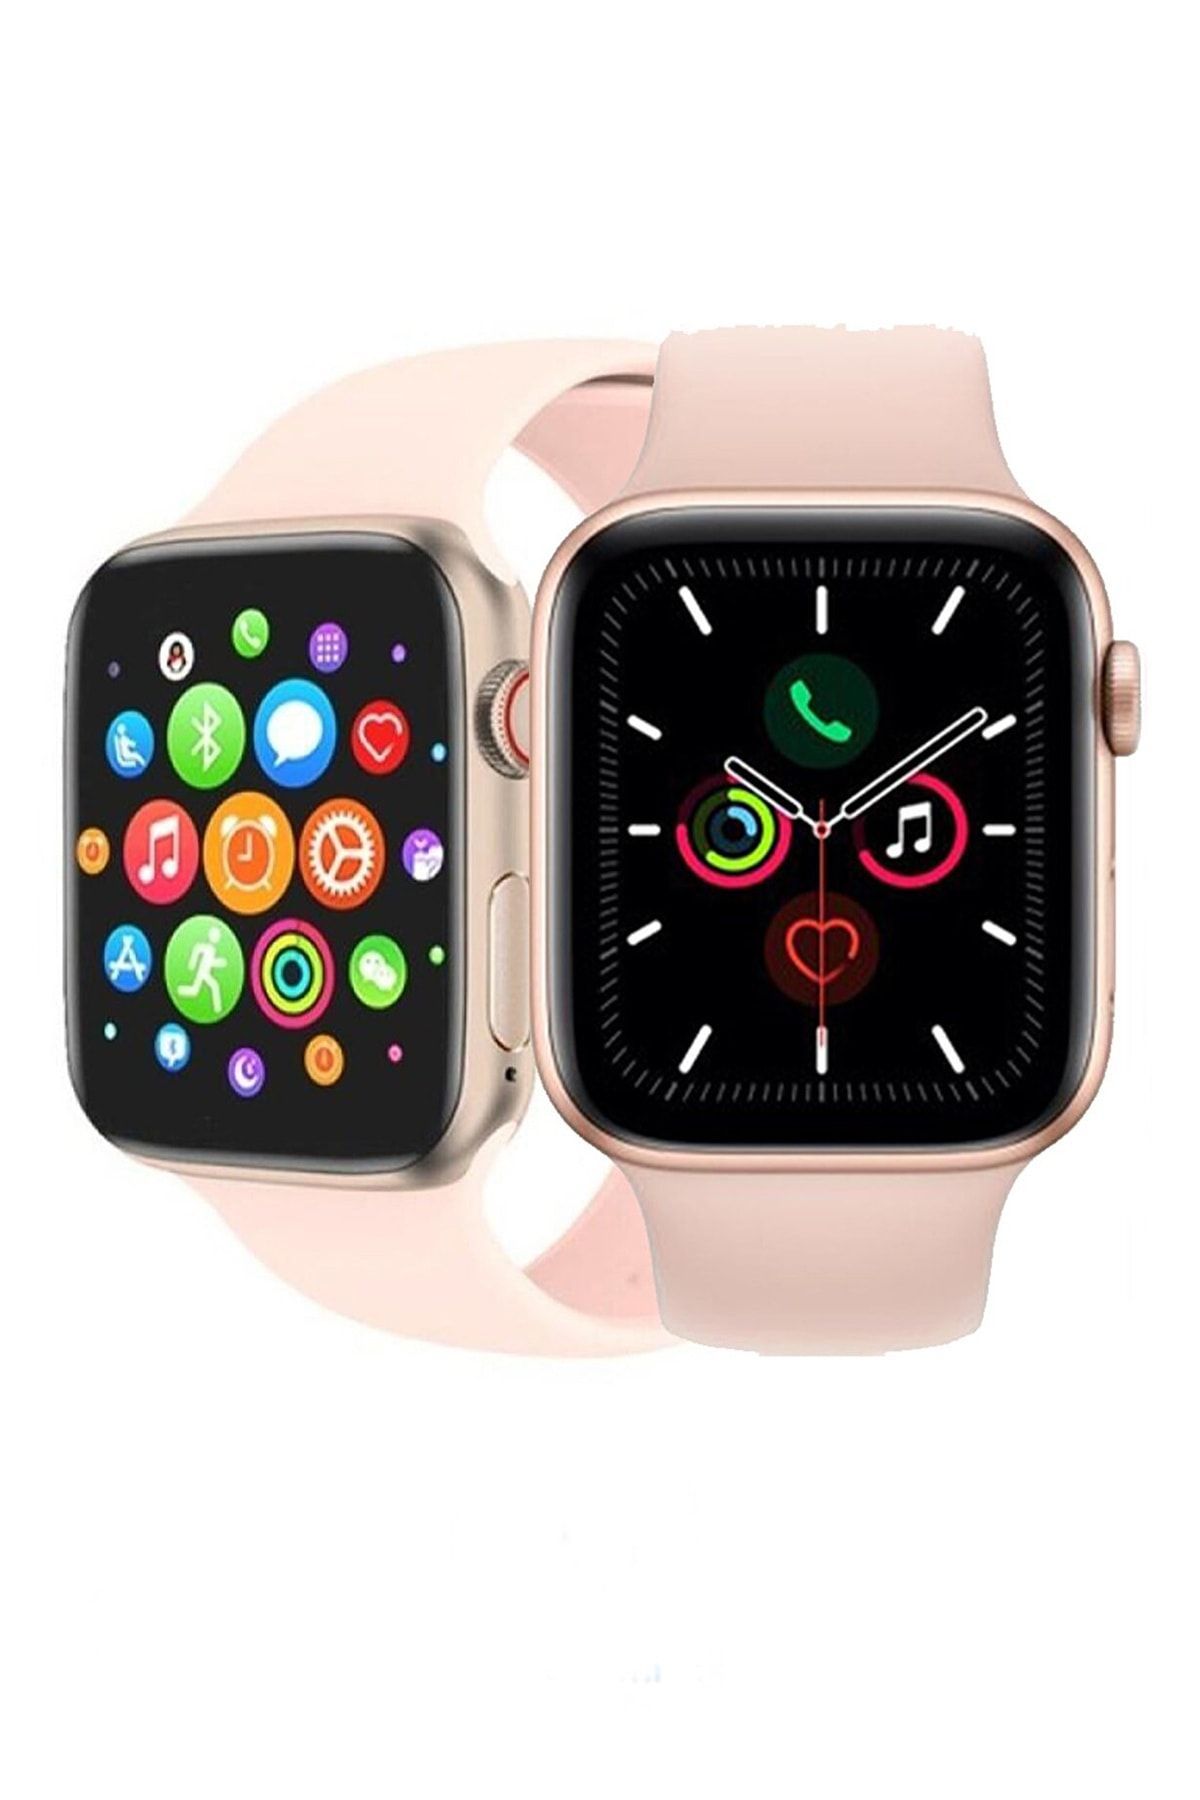 BONJUX Huawei Mate 20 Lite Uyumlu Smart Watch Türkçe Menü Nabız Tansiyon Ölçer Ip67 Akıllı Saat Pembe